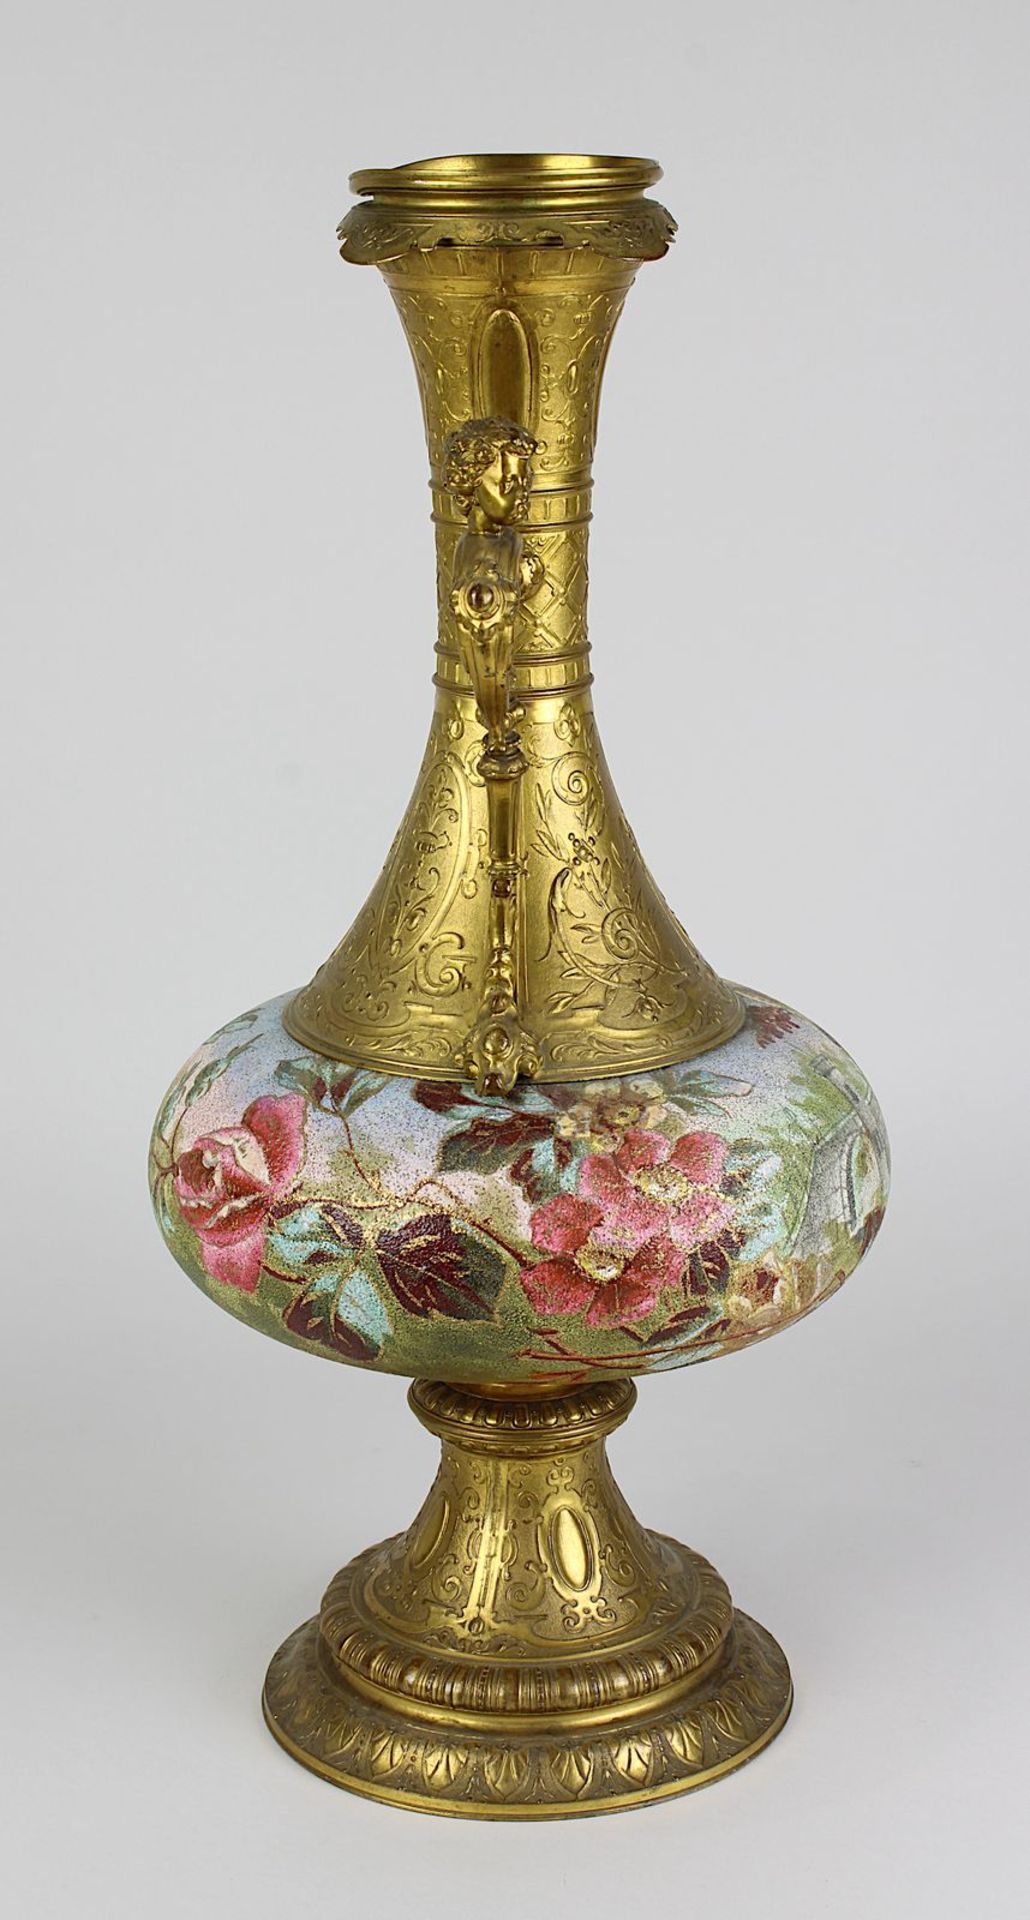 Historismus-Prunkvase aus Keramik mit Metallmontur, deutsch um 1880, Keramikkorpus floral - Image 2 of 3